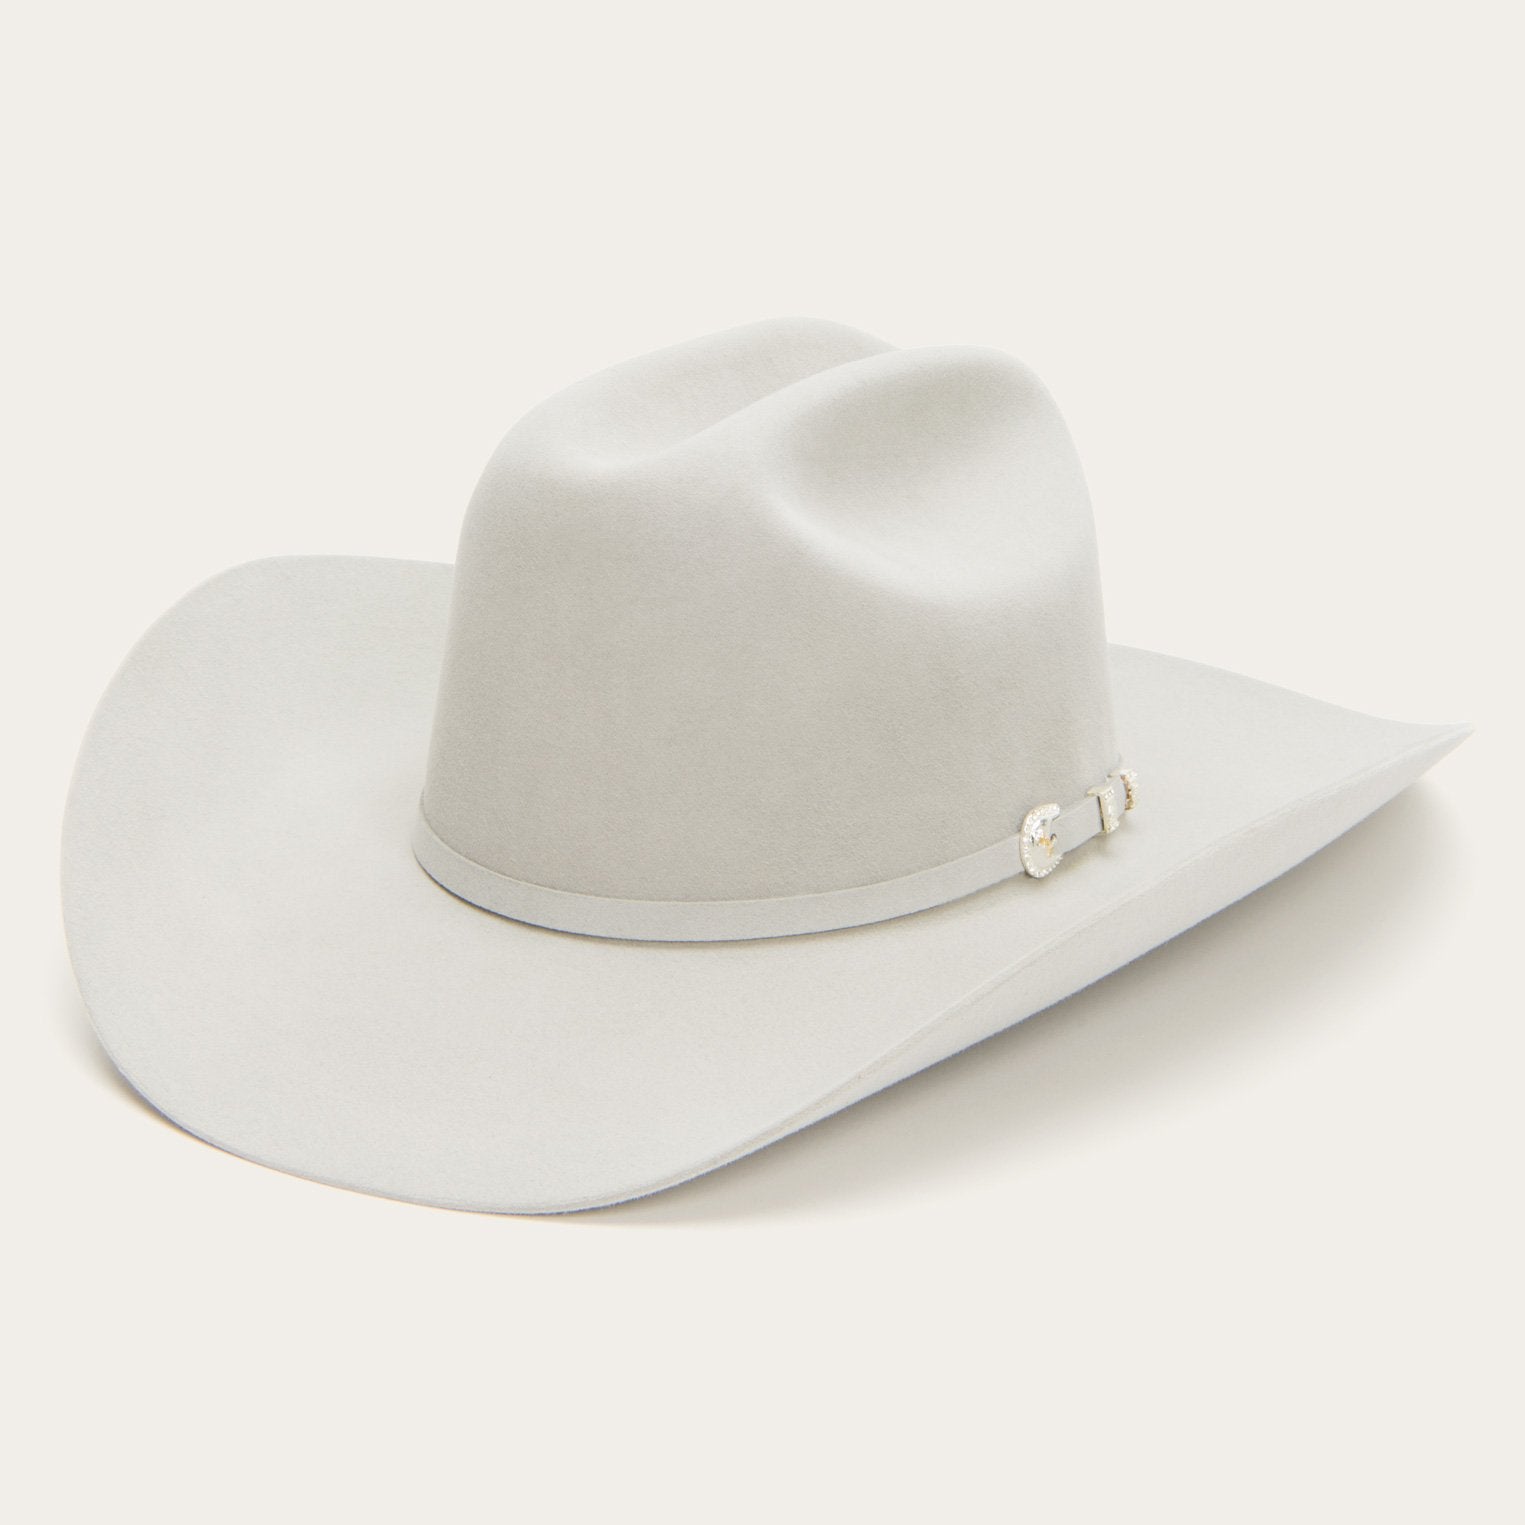 Open Road Shasta Premier Cowboy Hat